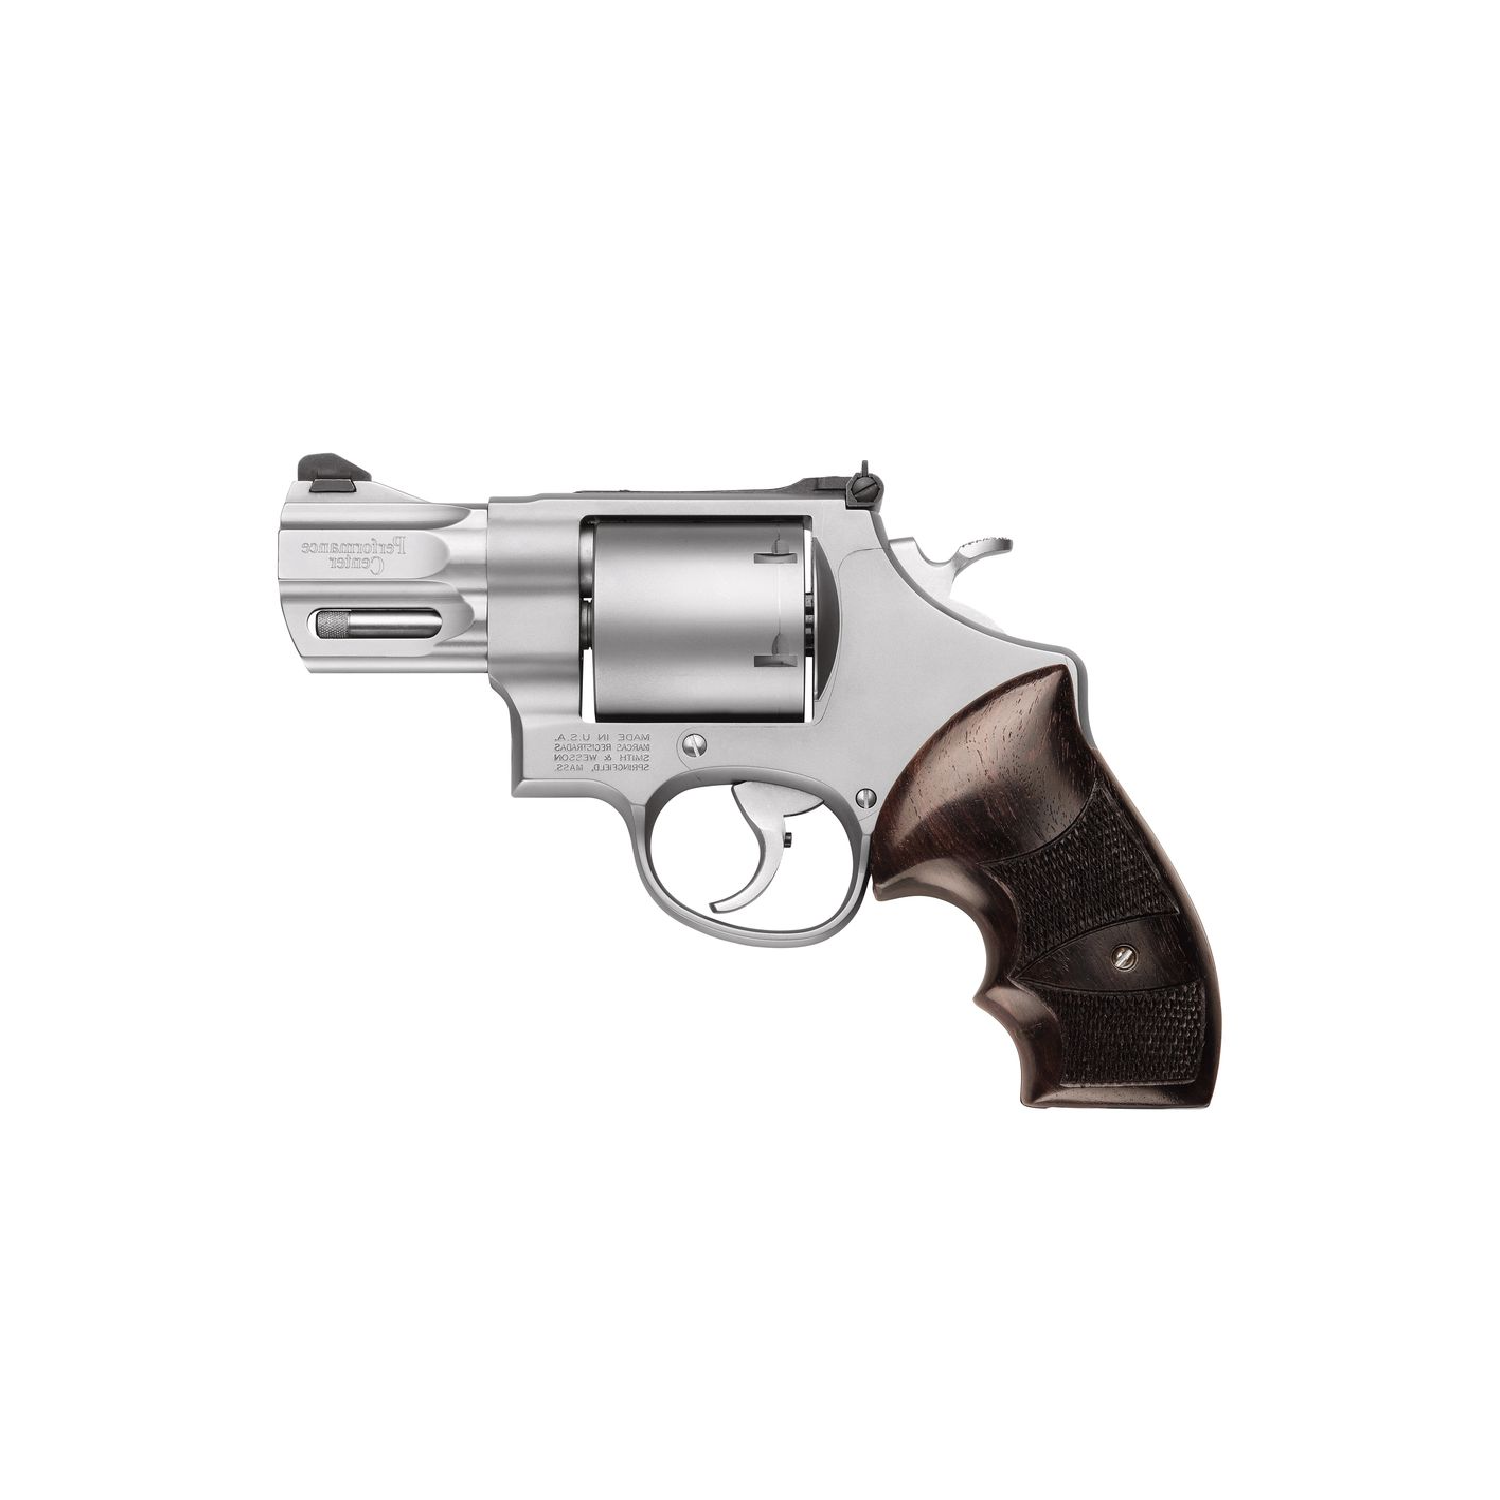 Smith & Wesson Mod. 627 Performance Center, .357 Magnum